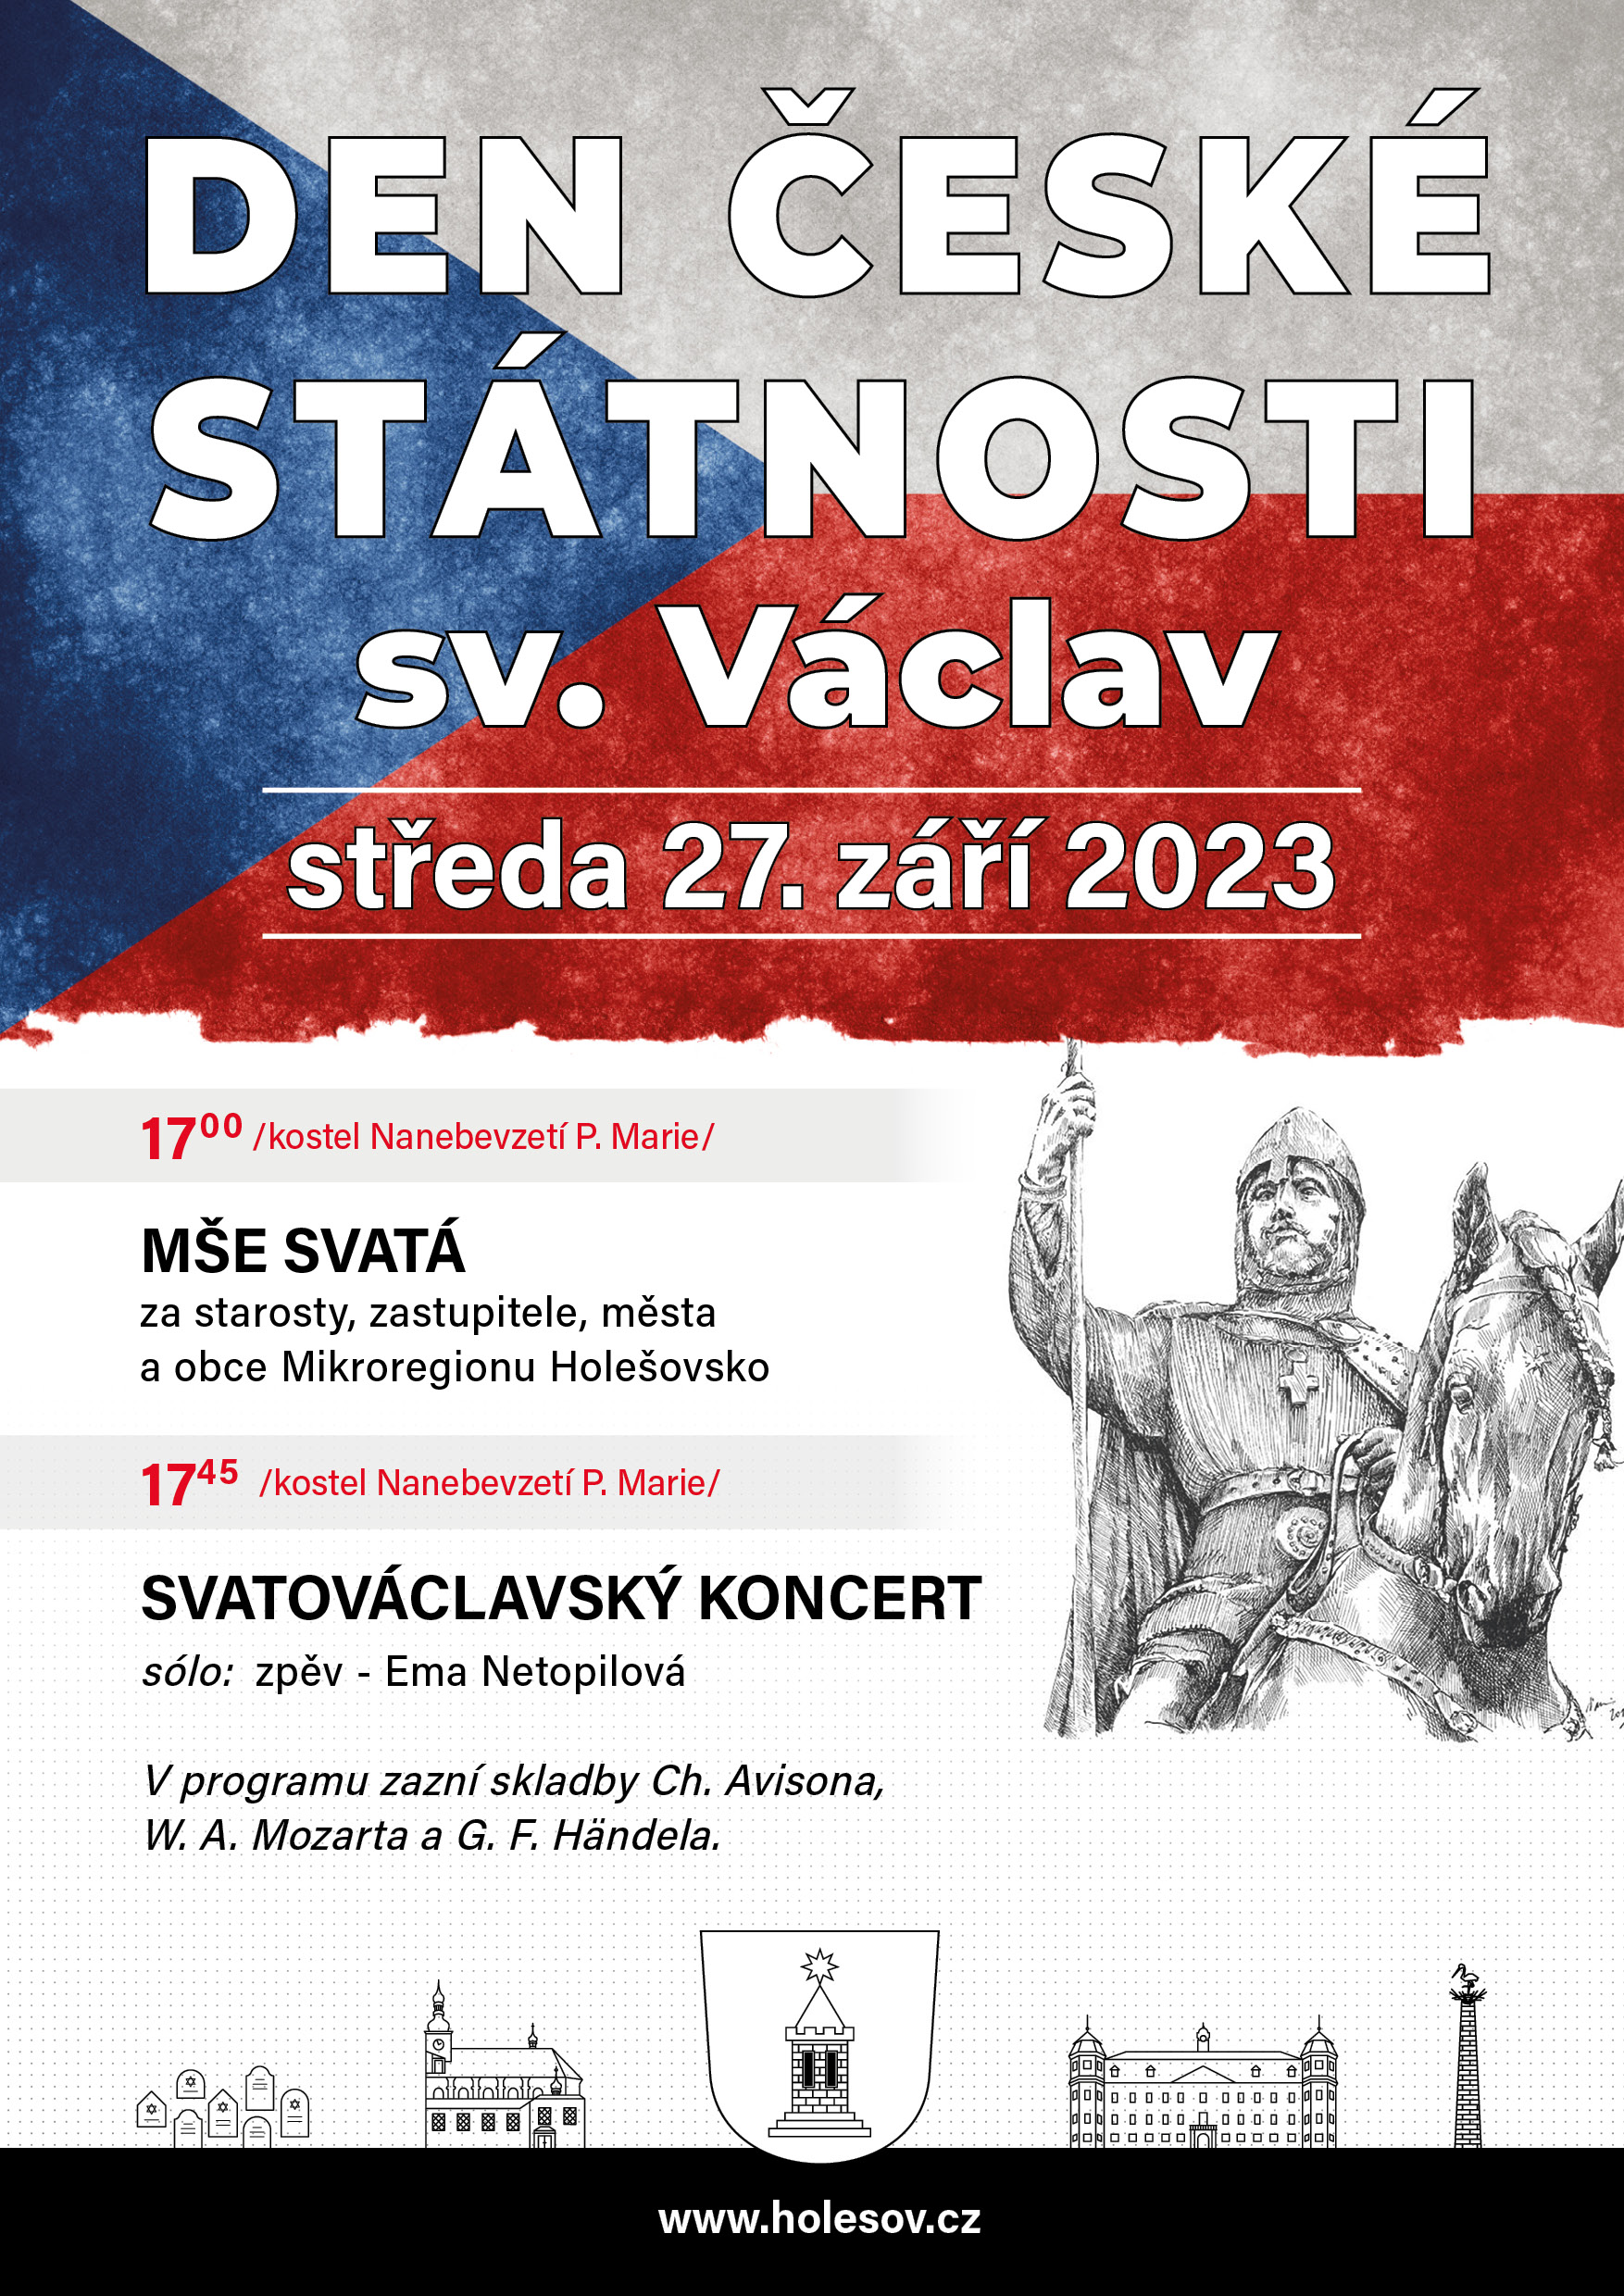 2023 sv. vaclav